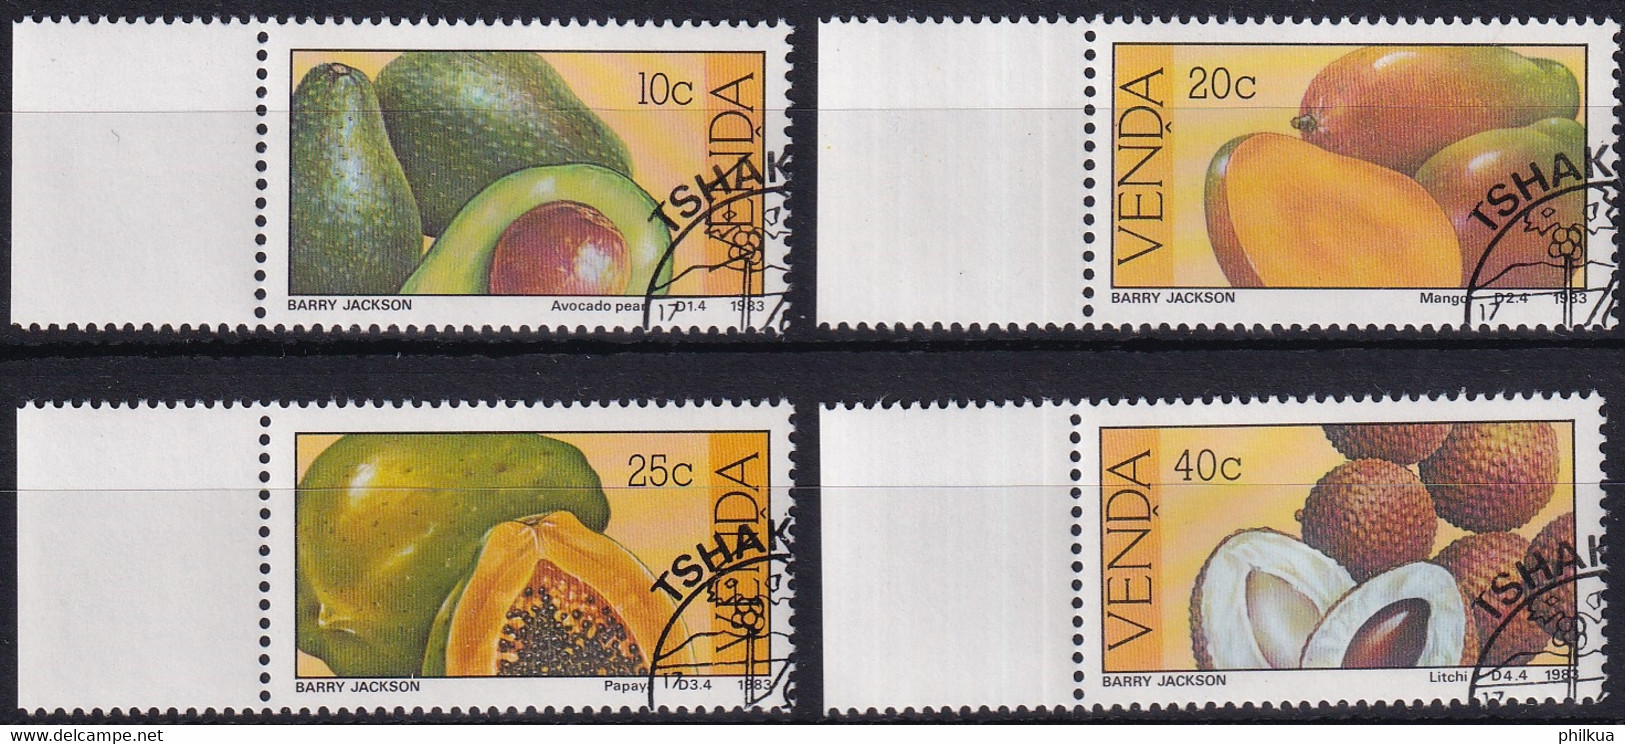 MiNr. 82 - 85 Südafrika, Venda 1983, 26. Okt. Früchte - Sauber Gestempelt - Venda